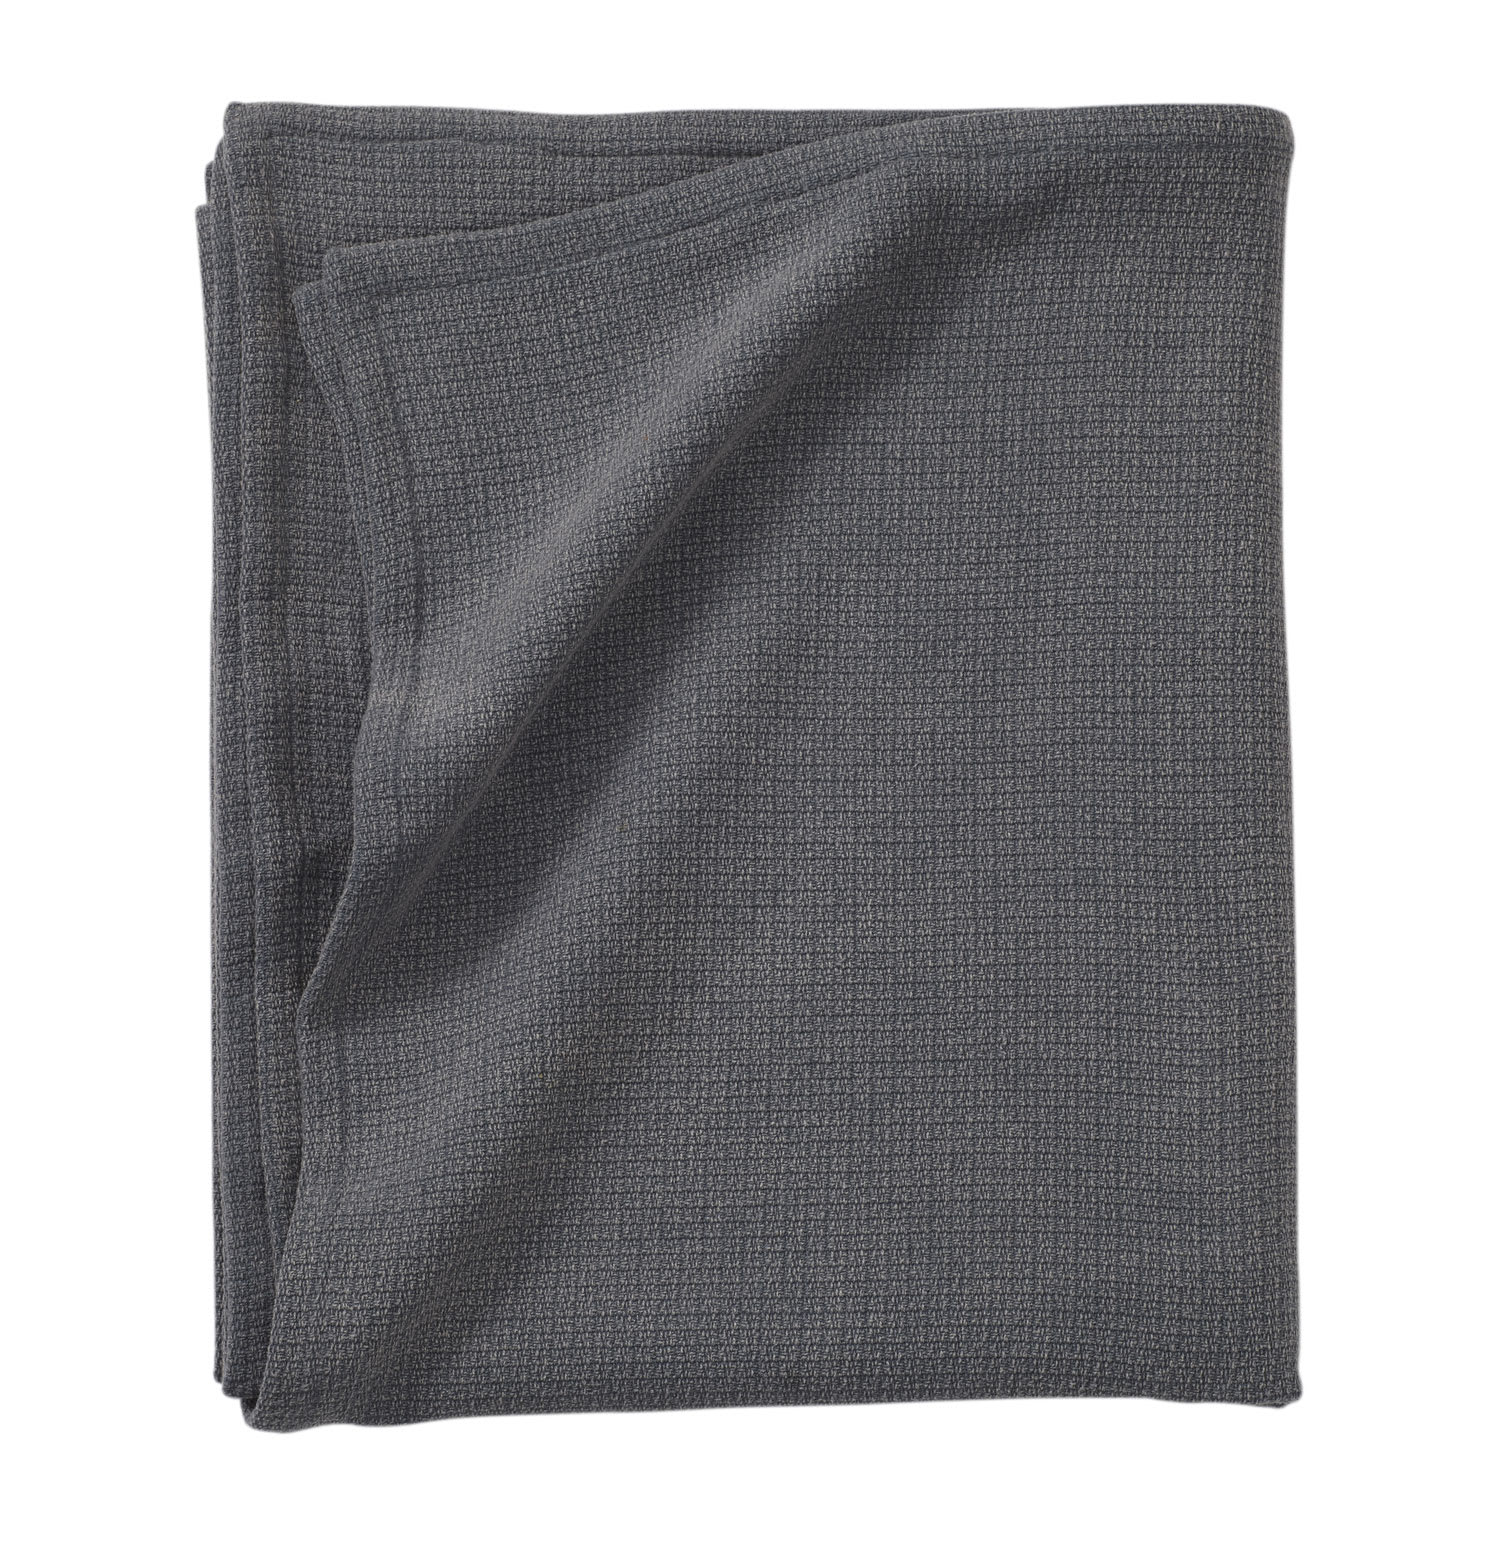 Cstudio Home Distressed Cotton Blanket - Gray